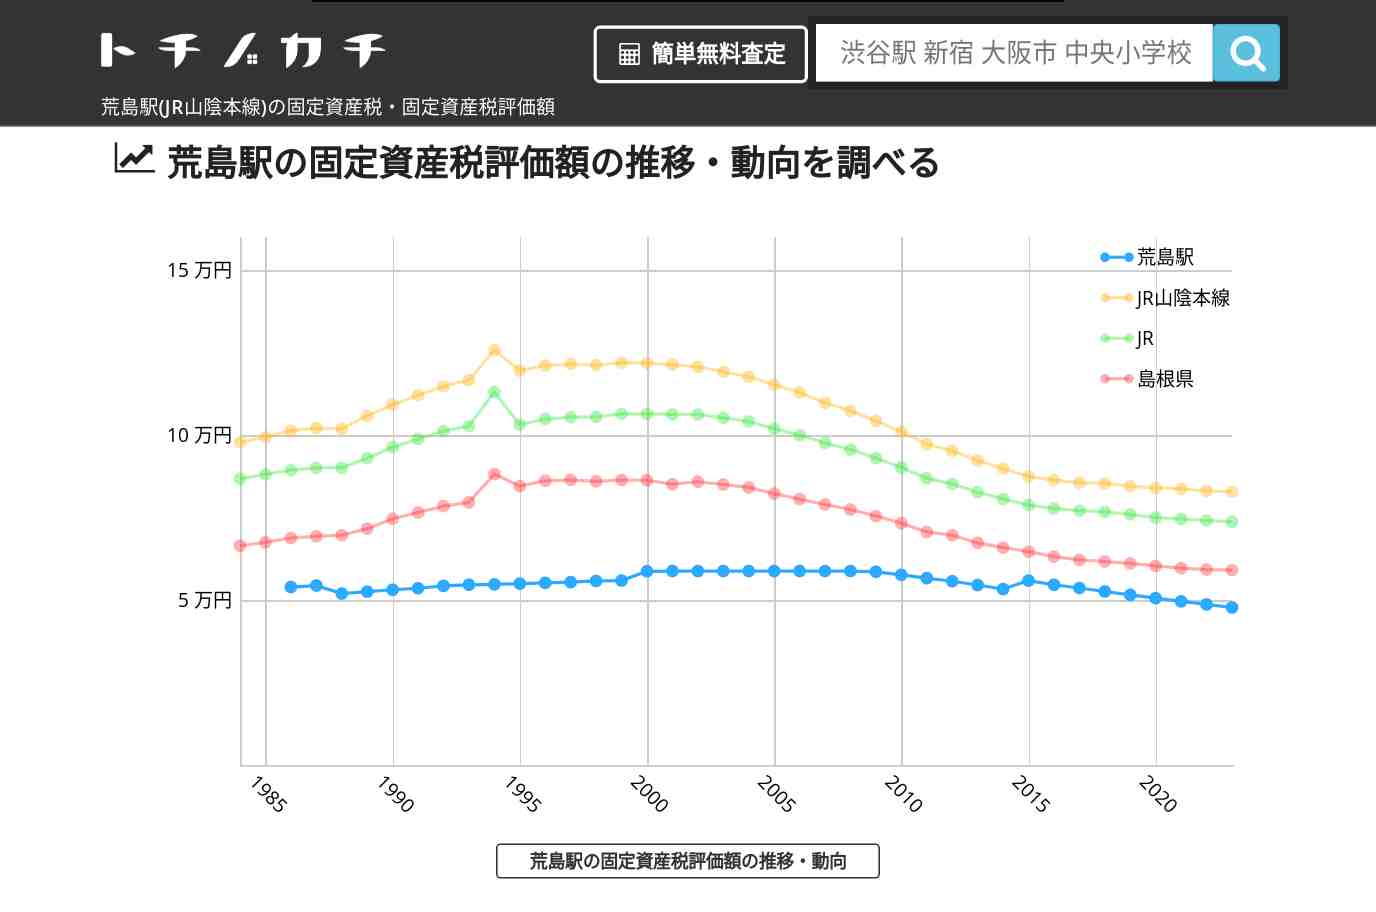 荒島駅(JR山陰本線)の固定資産税・固定資産税評価額 | トチノカチ